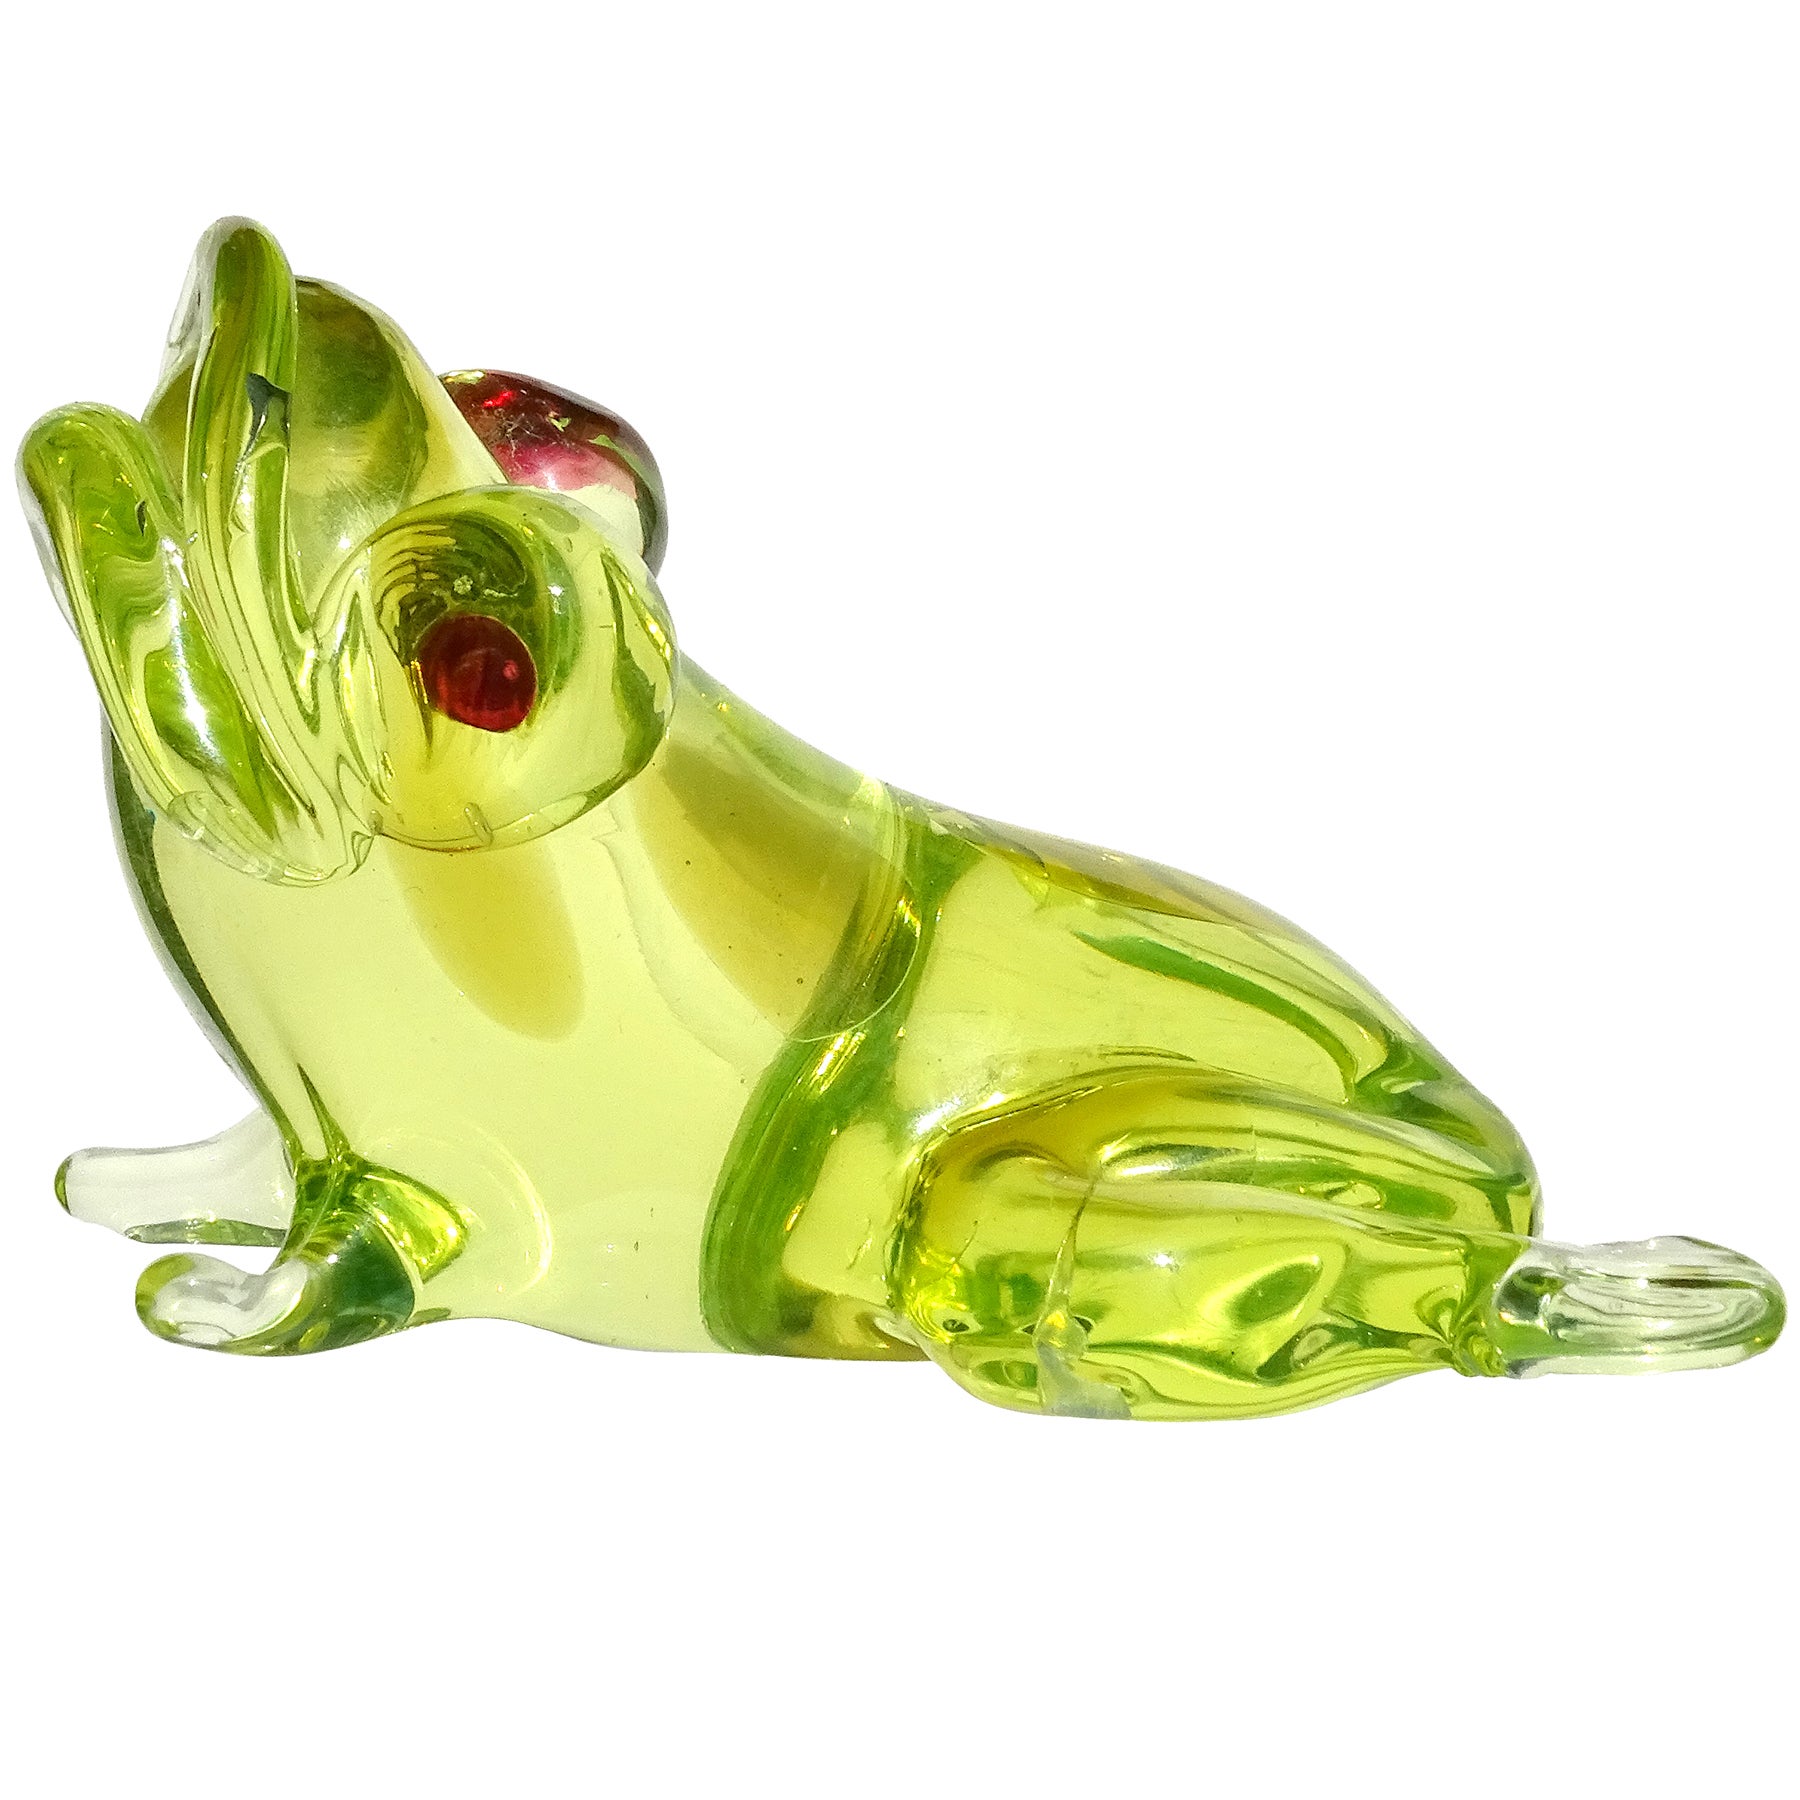 Murano Glowing Uranium Italian Art Glass Frog Paperweight Figurine Sculpture For Sale